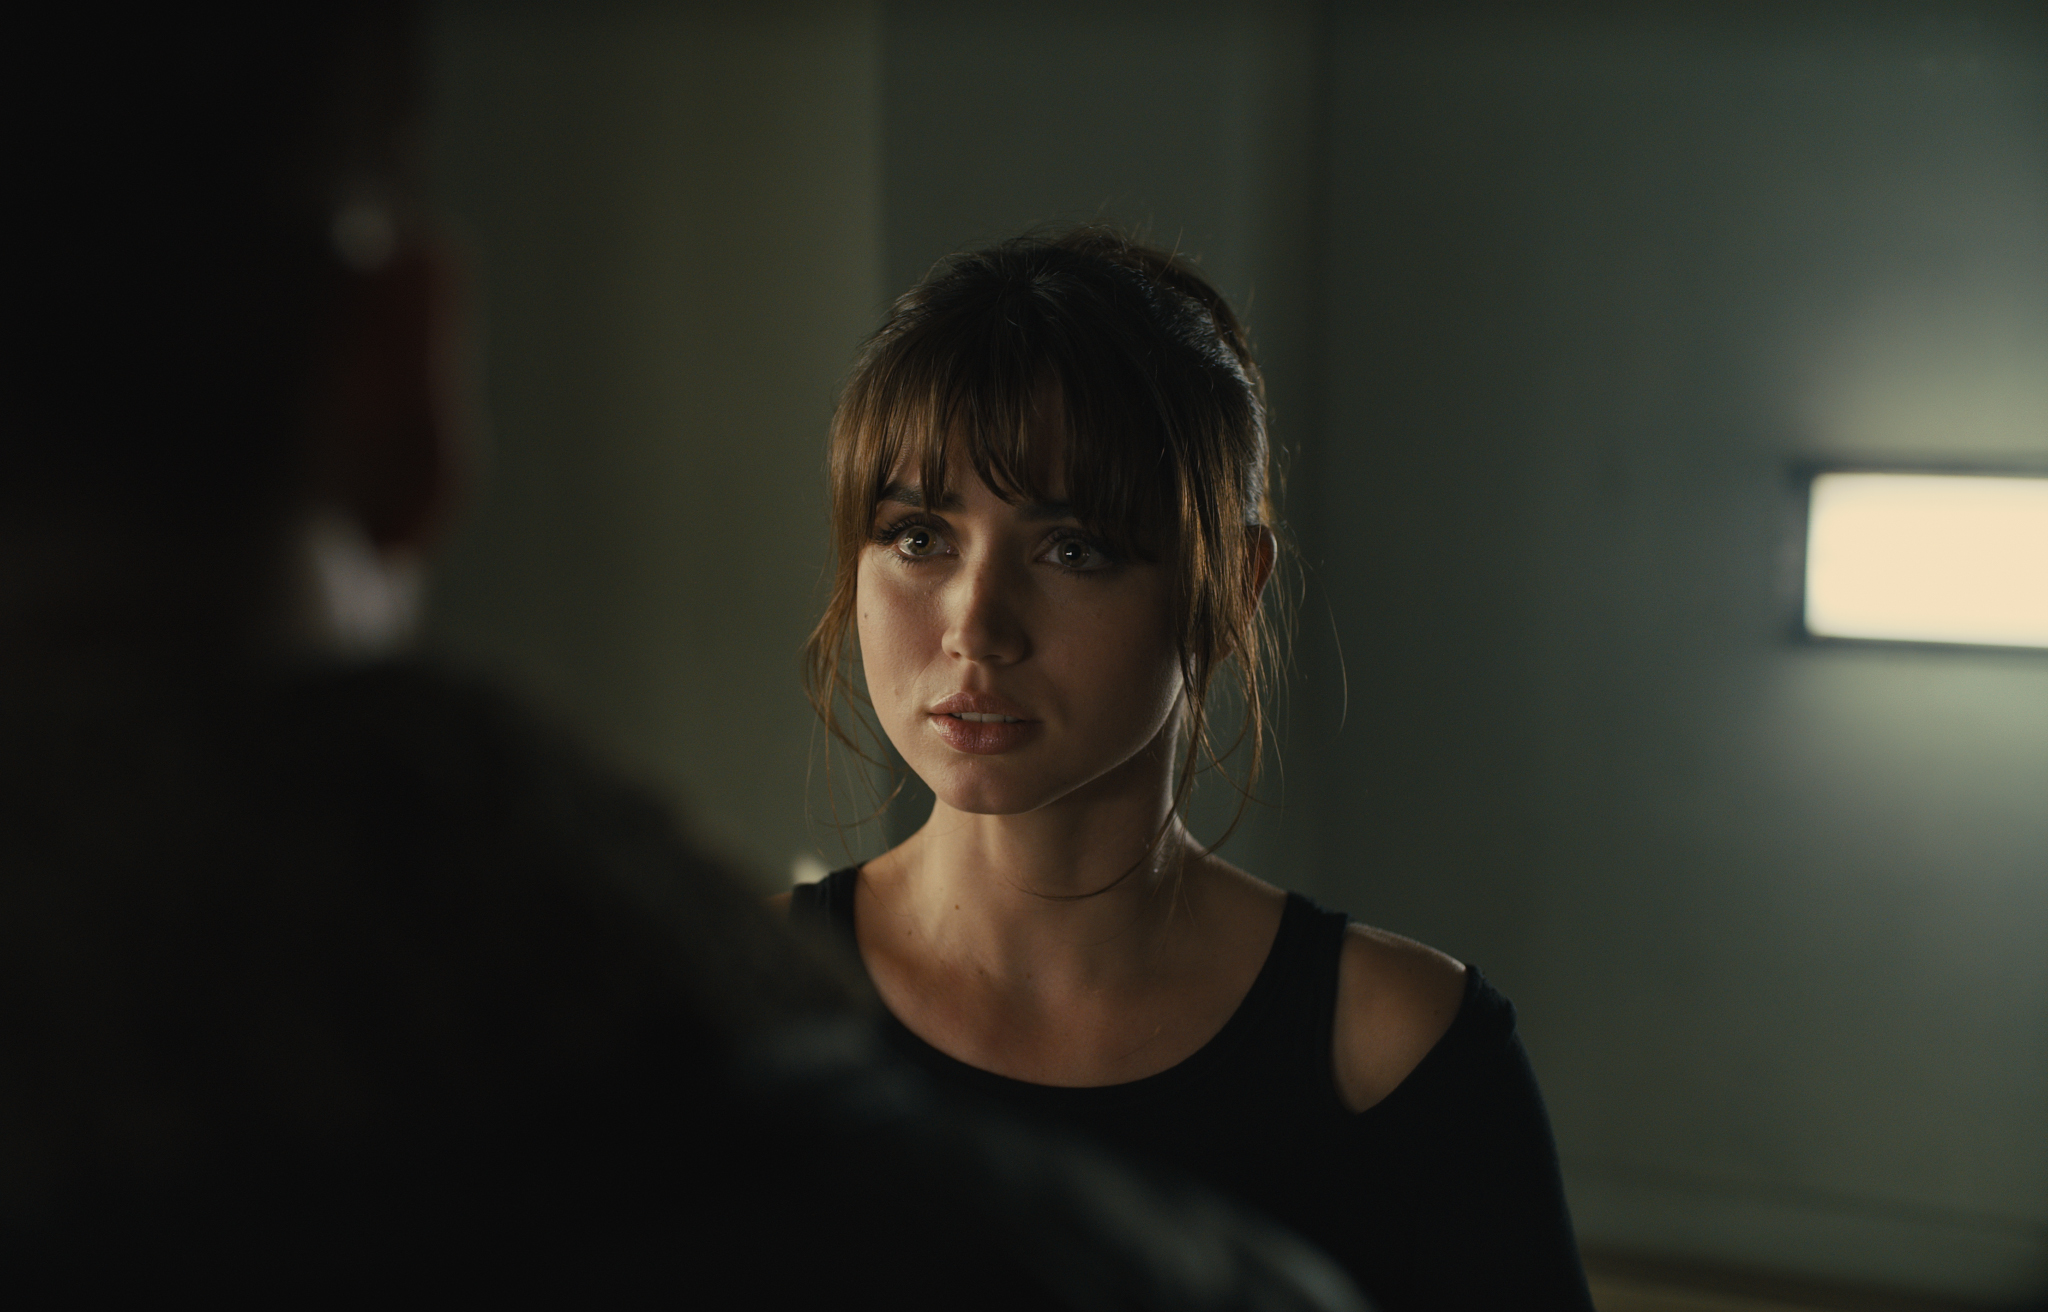 Blade Runner 2049 Ryan Gosling And Ana De Armas Wallpapers